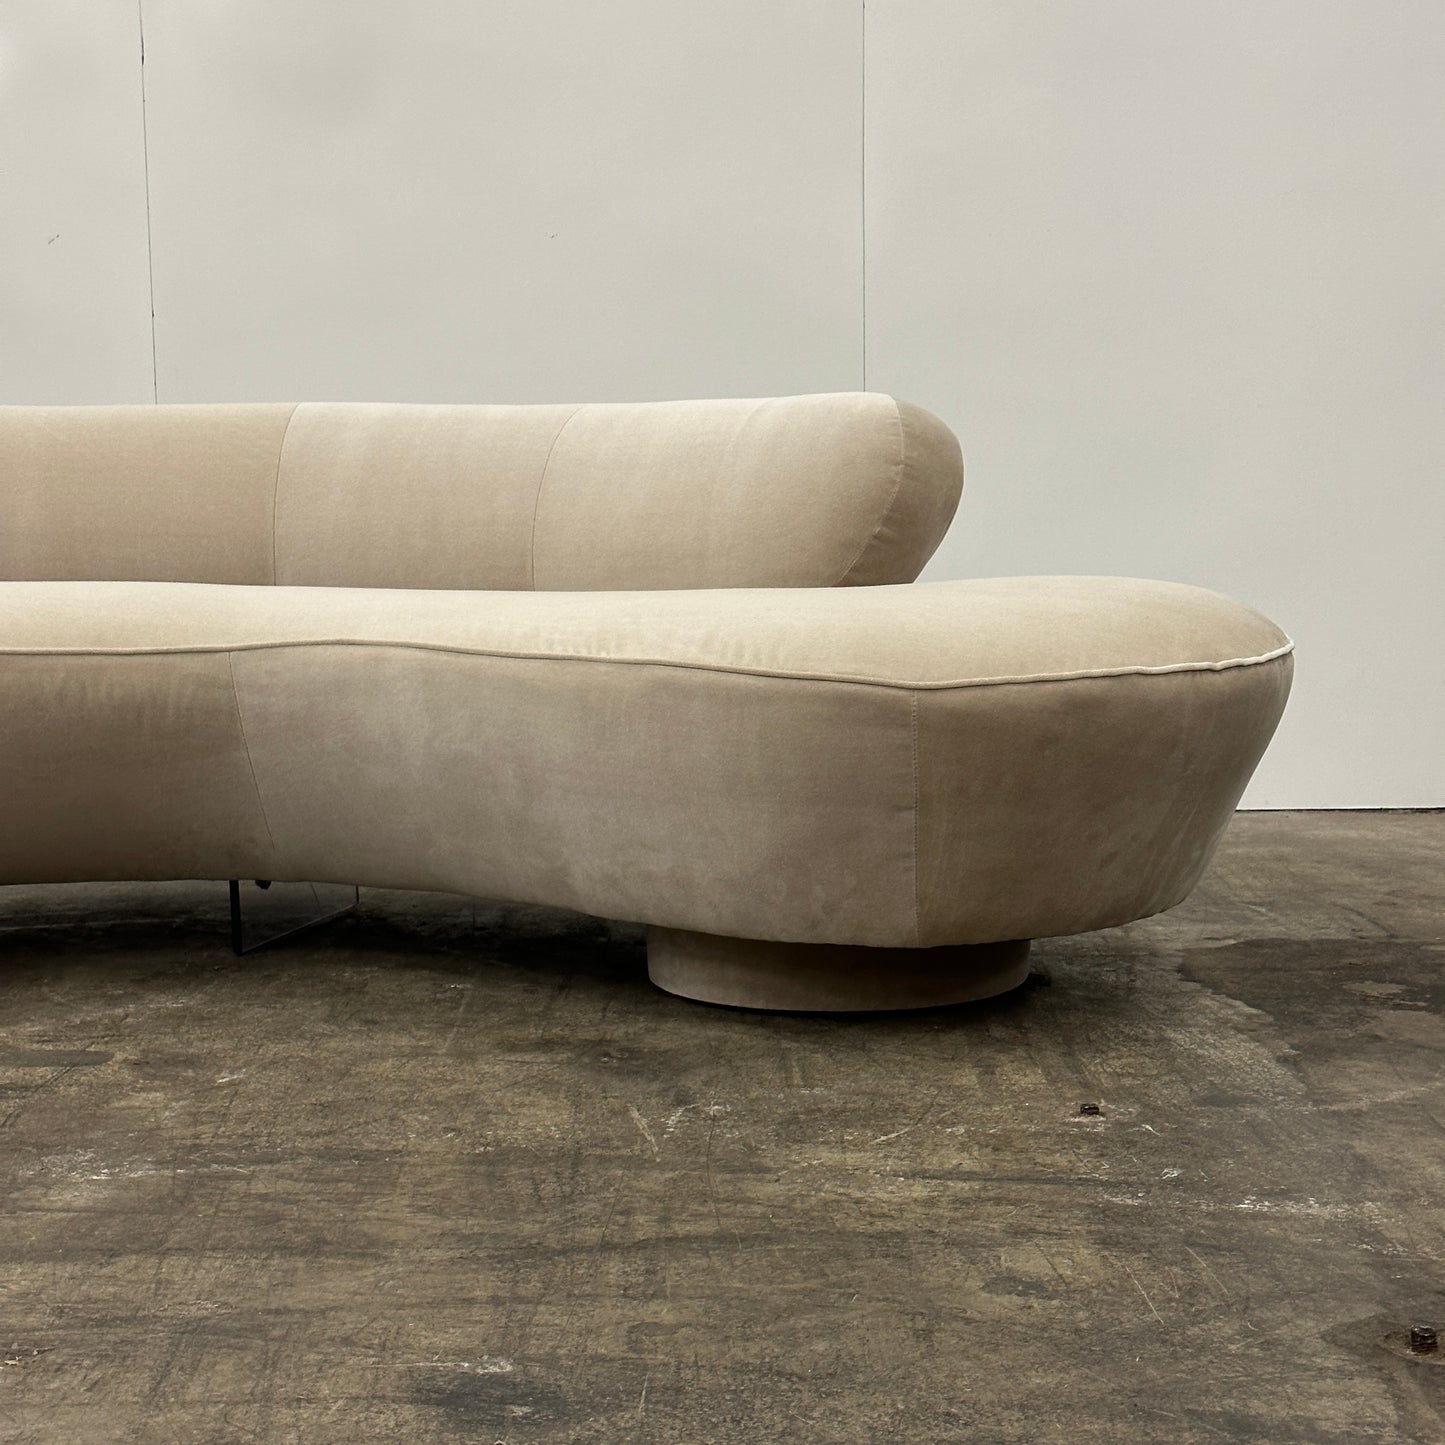 Serpentine Cloud Sofa by Vladimir Kagan for Directional